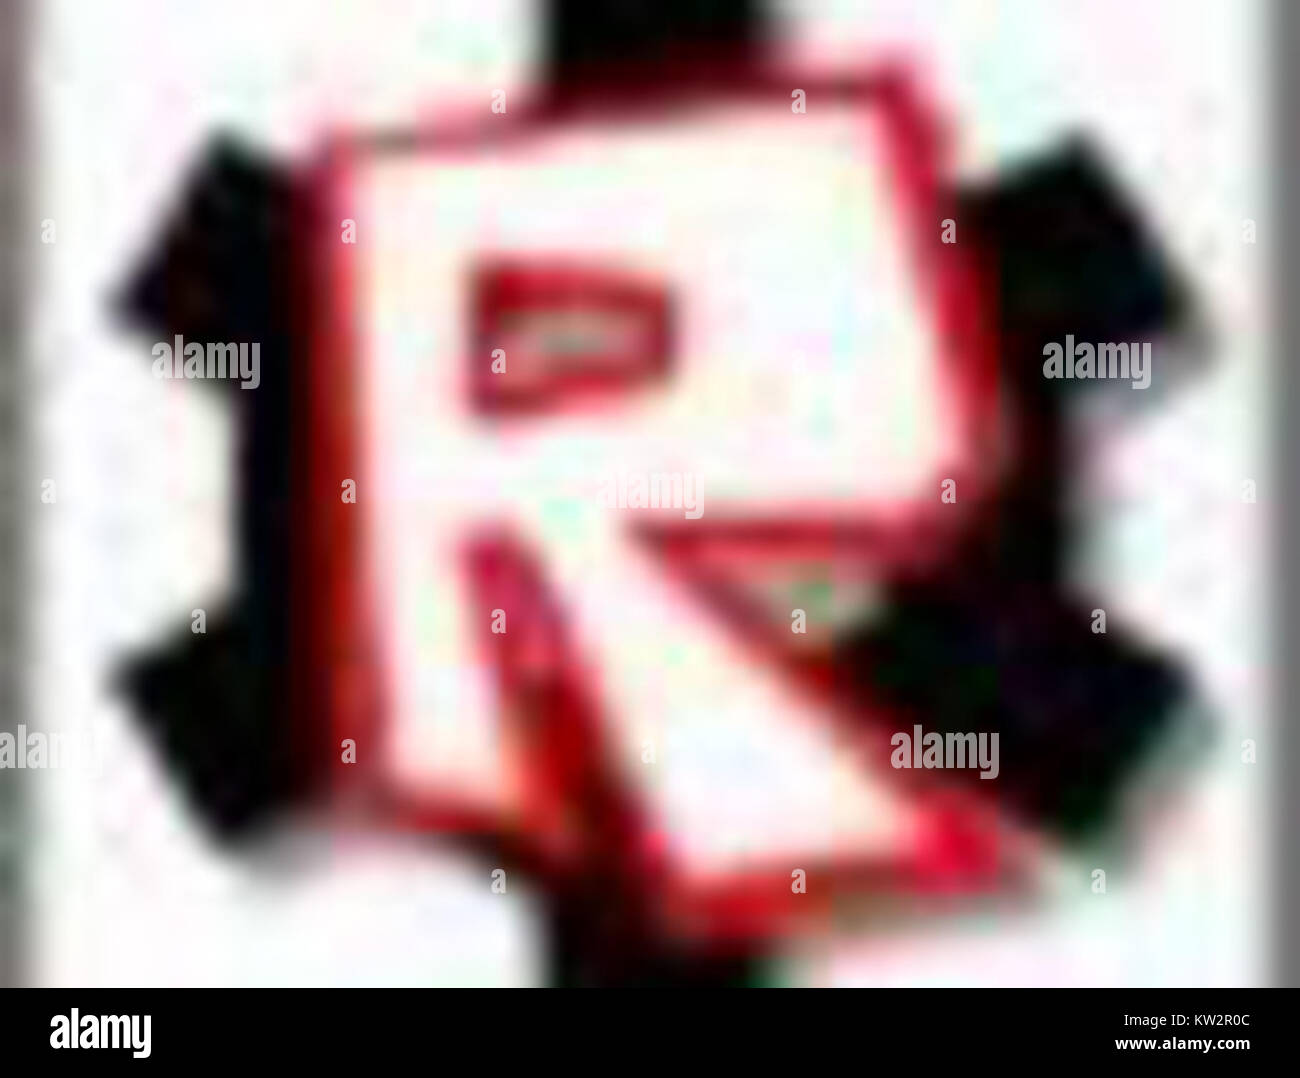 Roblox Logo Brag Stock Photo Alamy - roblox logo copy paste